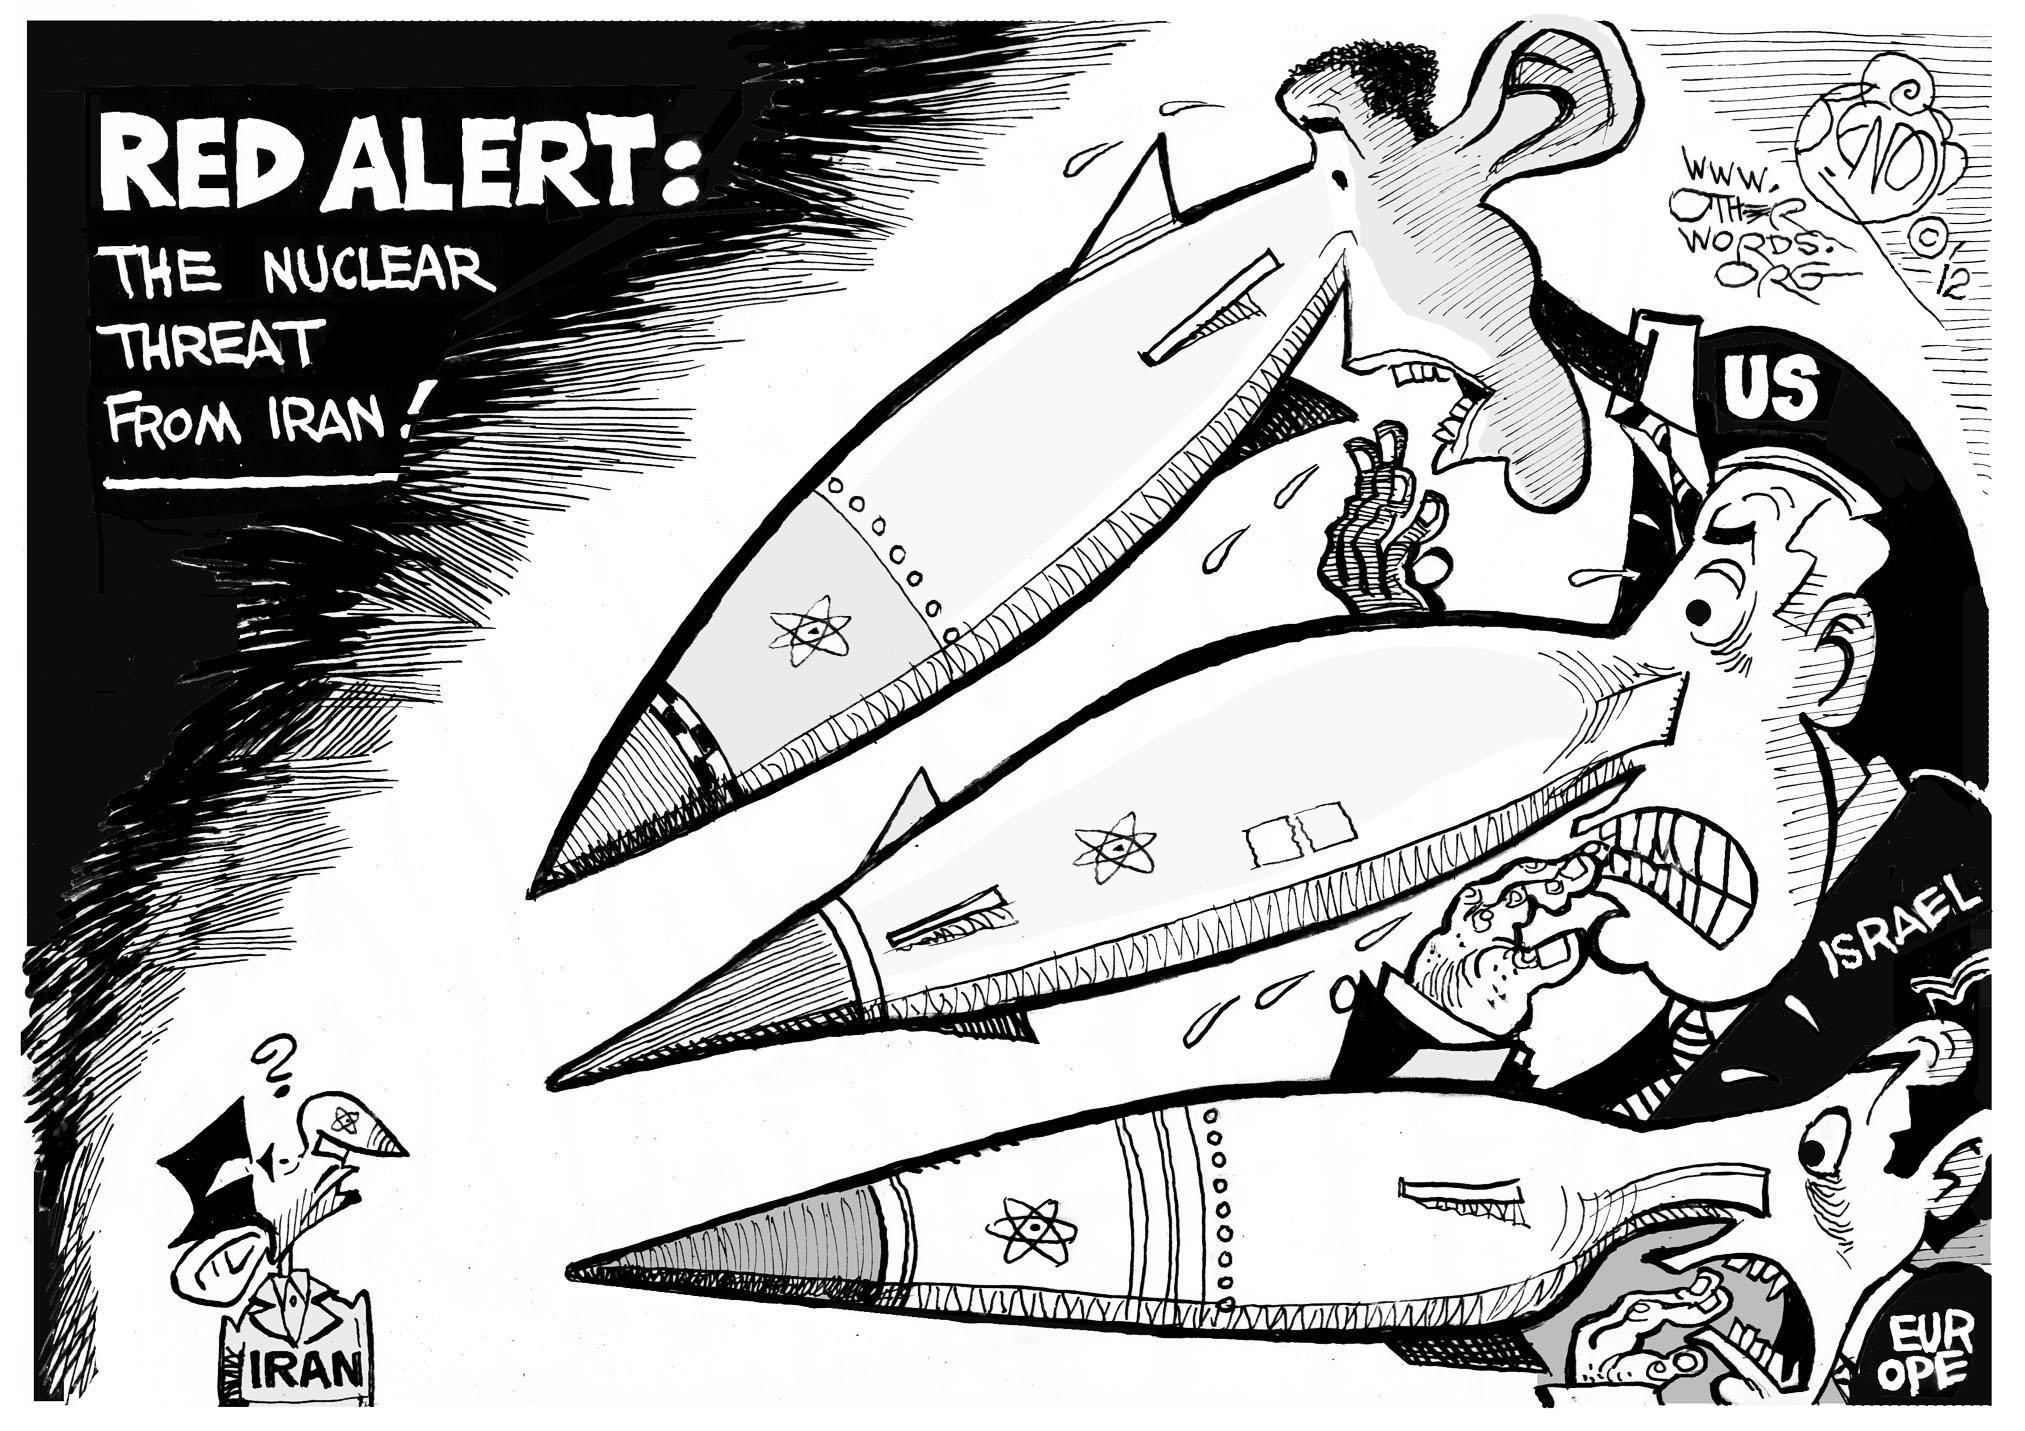 nuke-alert-iran-cartoon.jpg